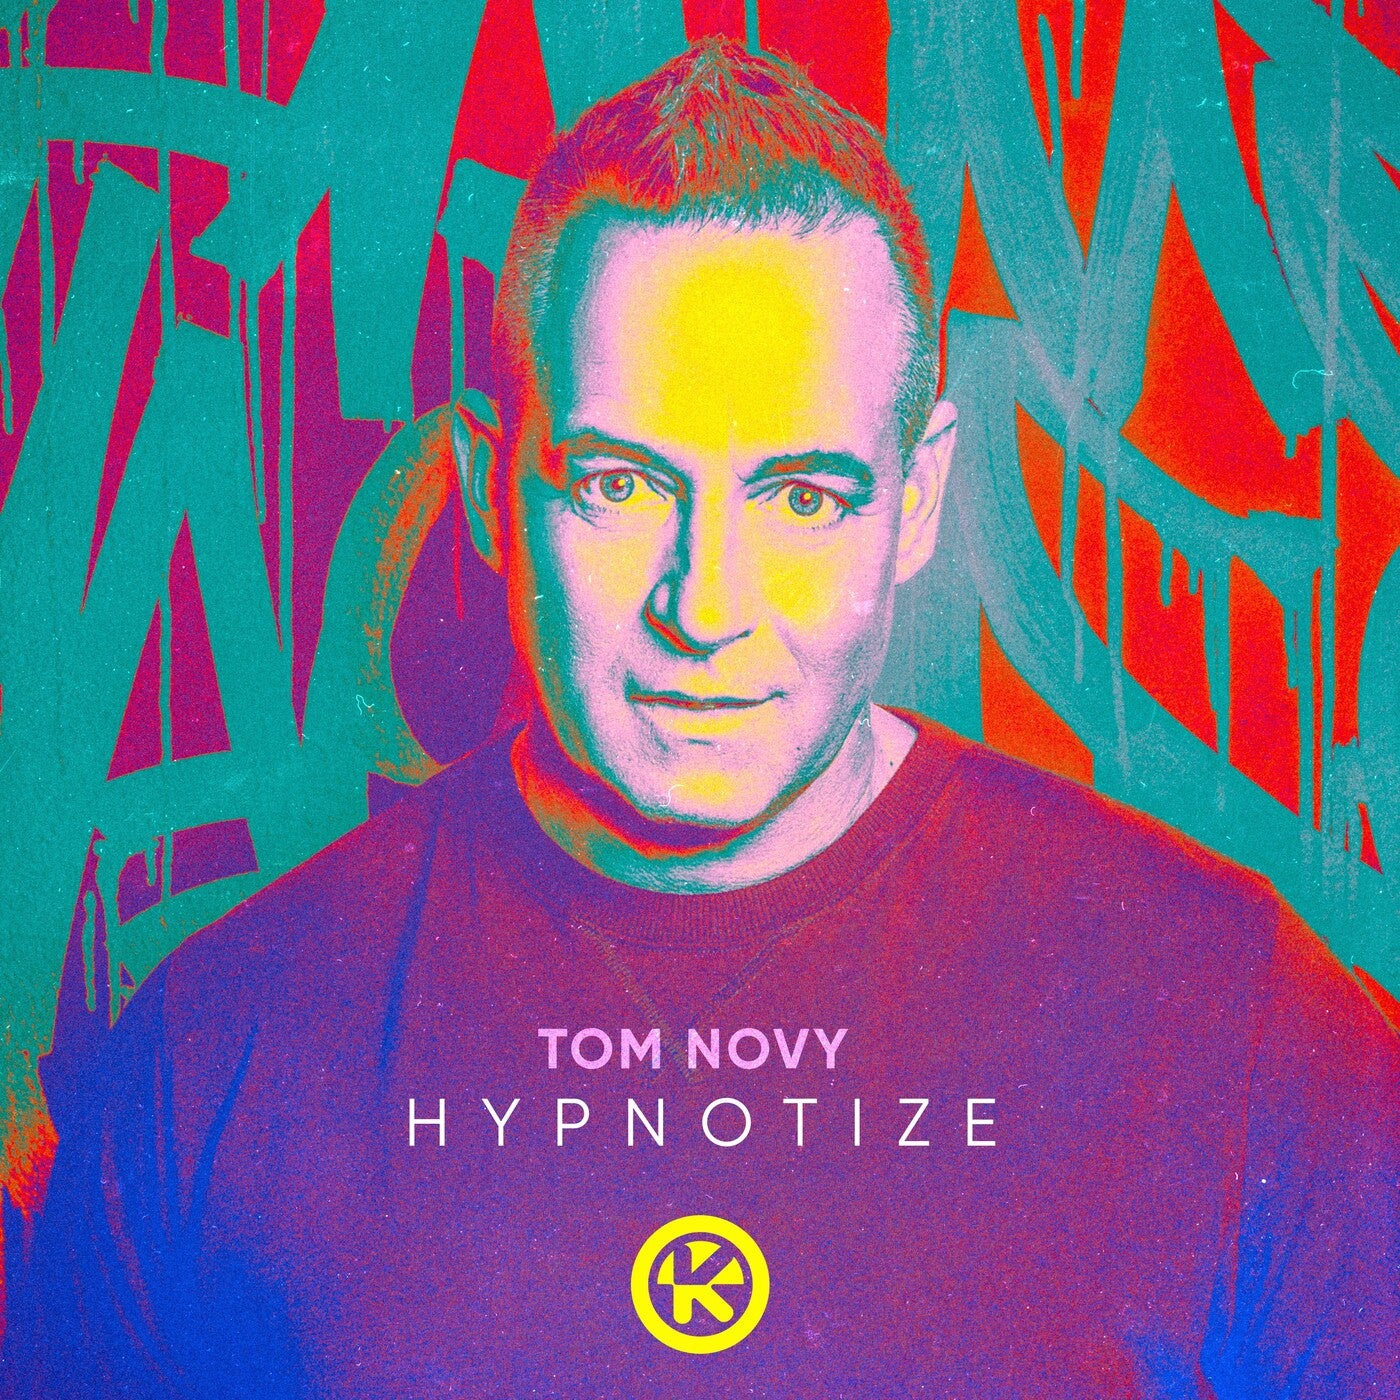 Tom novy. Hypnosis Cover. Tom novy Lima take it.